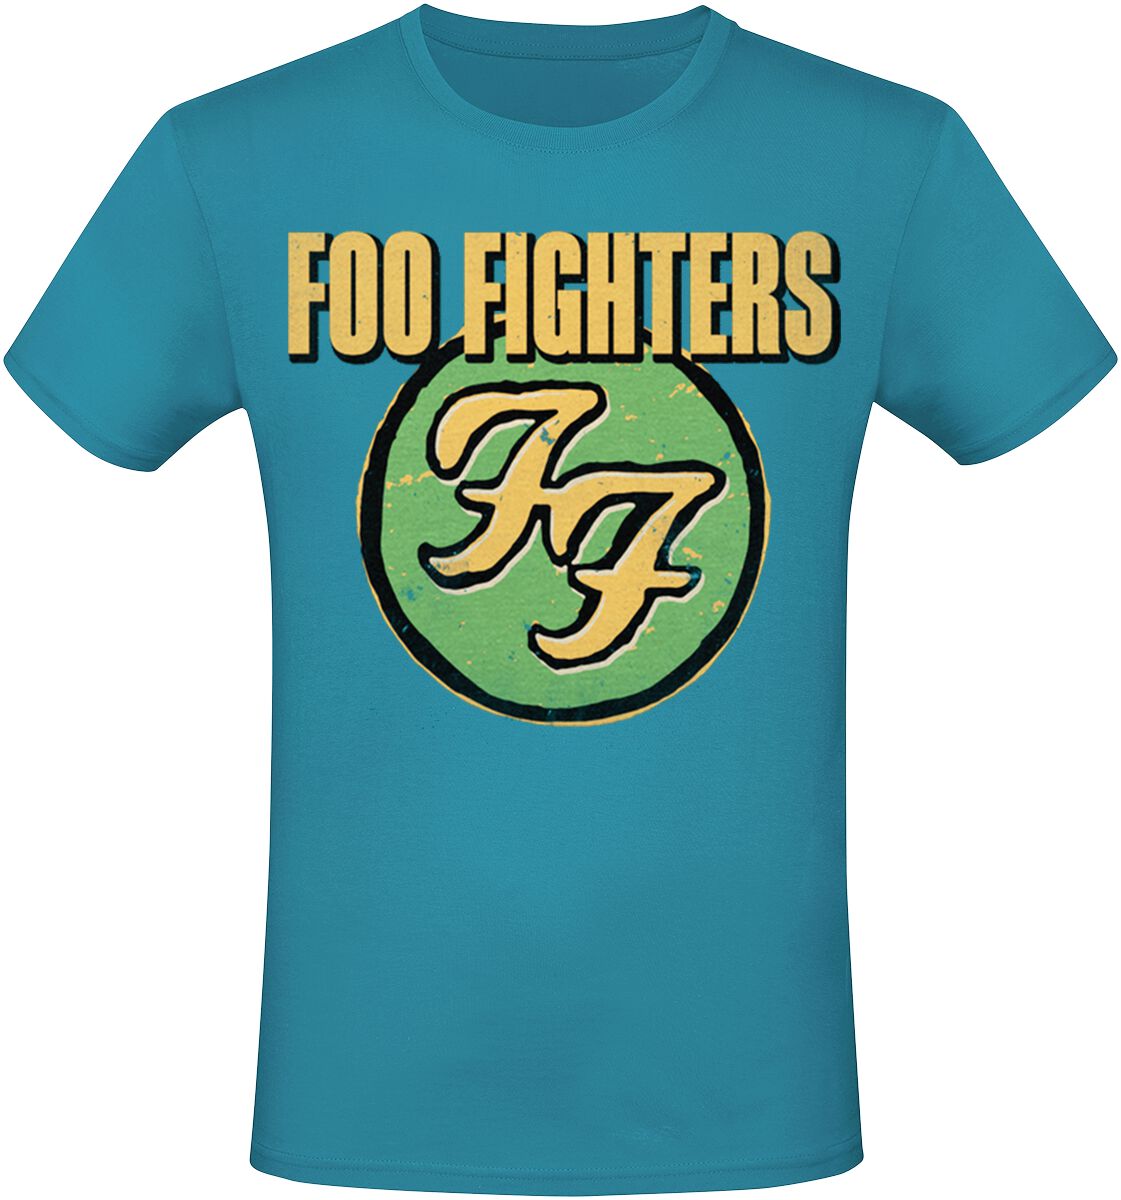 Foo Fighters Logo T-Shirt blau in M von Foo Fighters